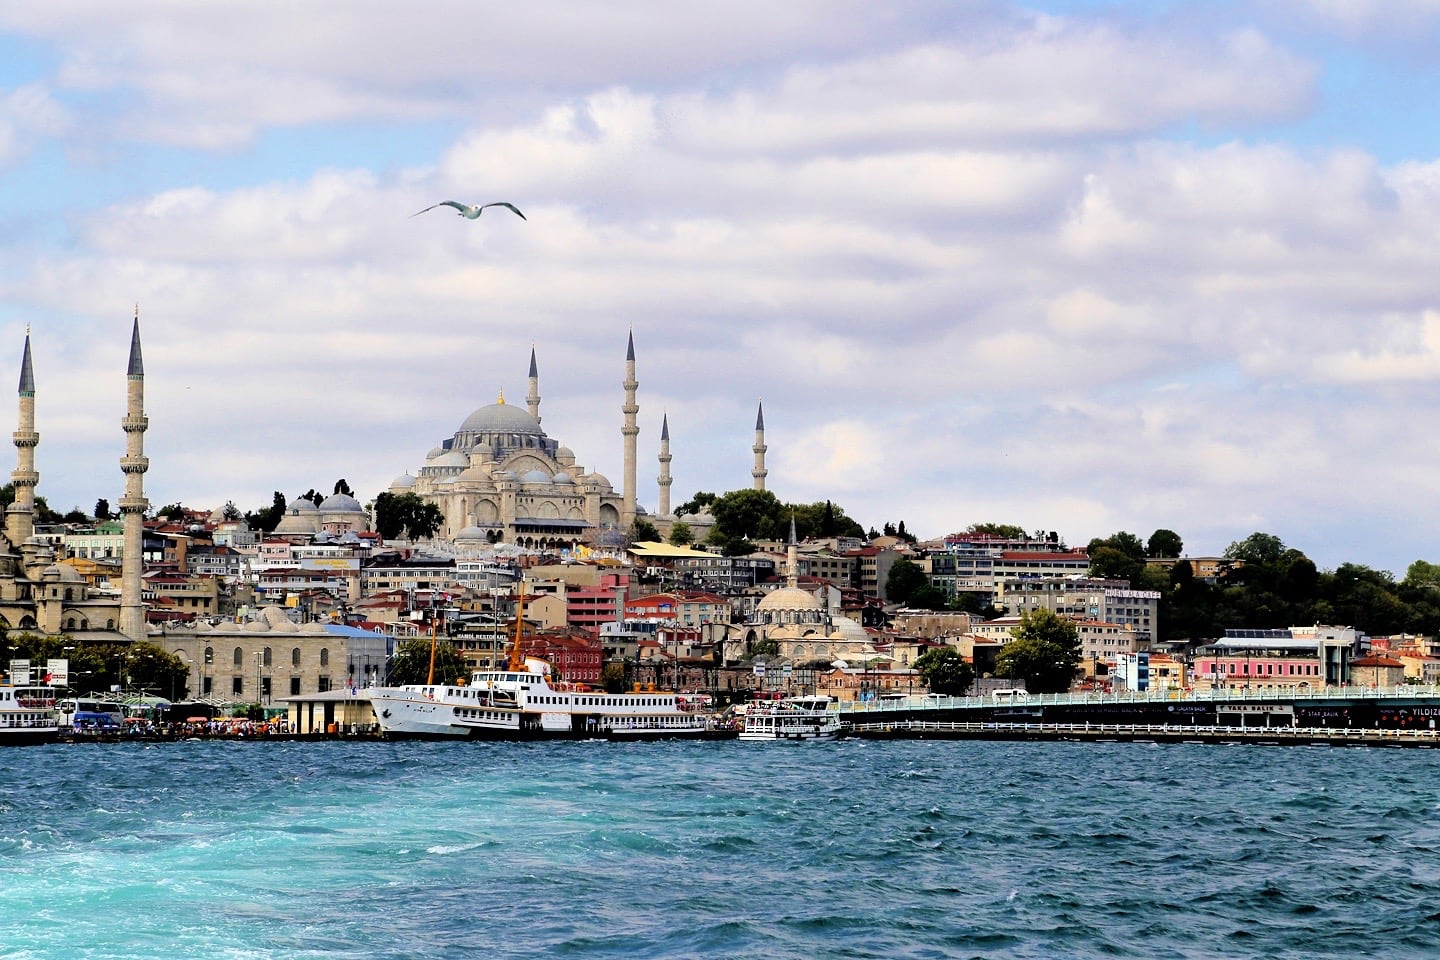 Istanbul Eminönü and mosque